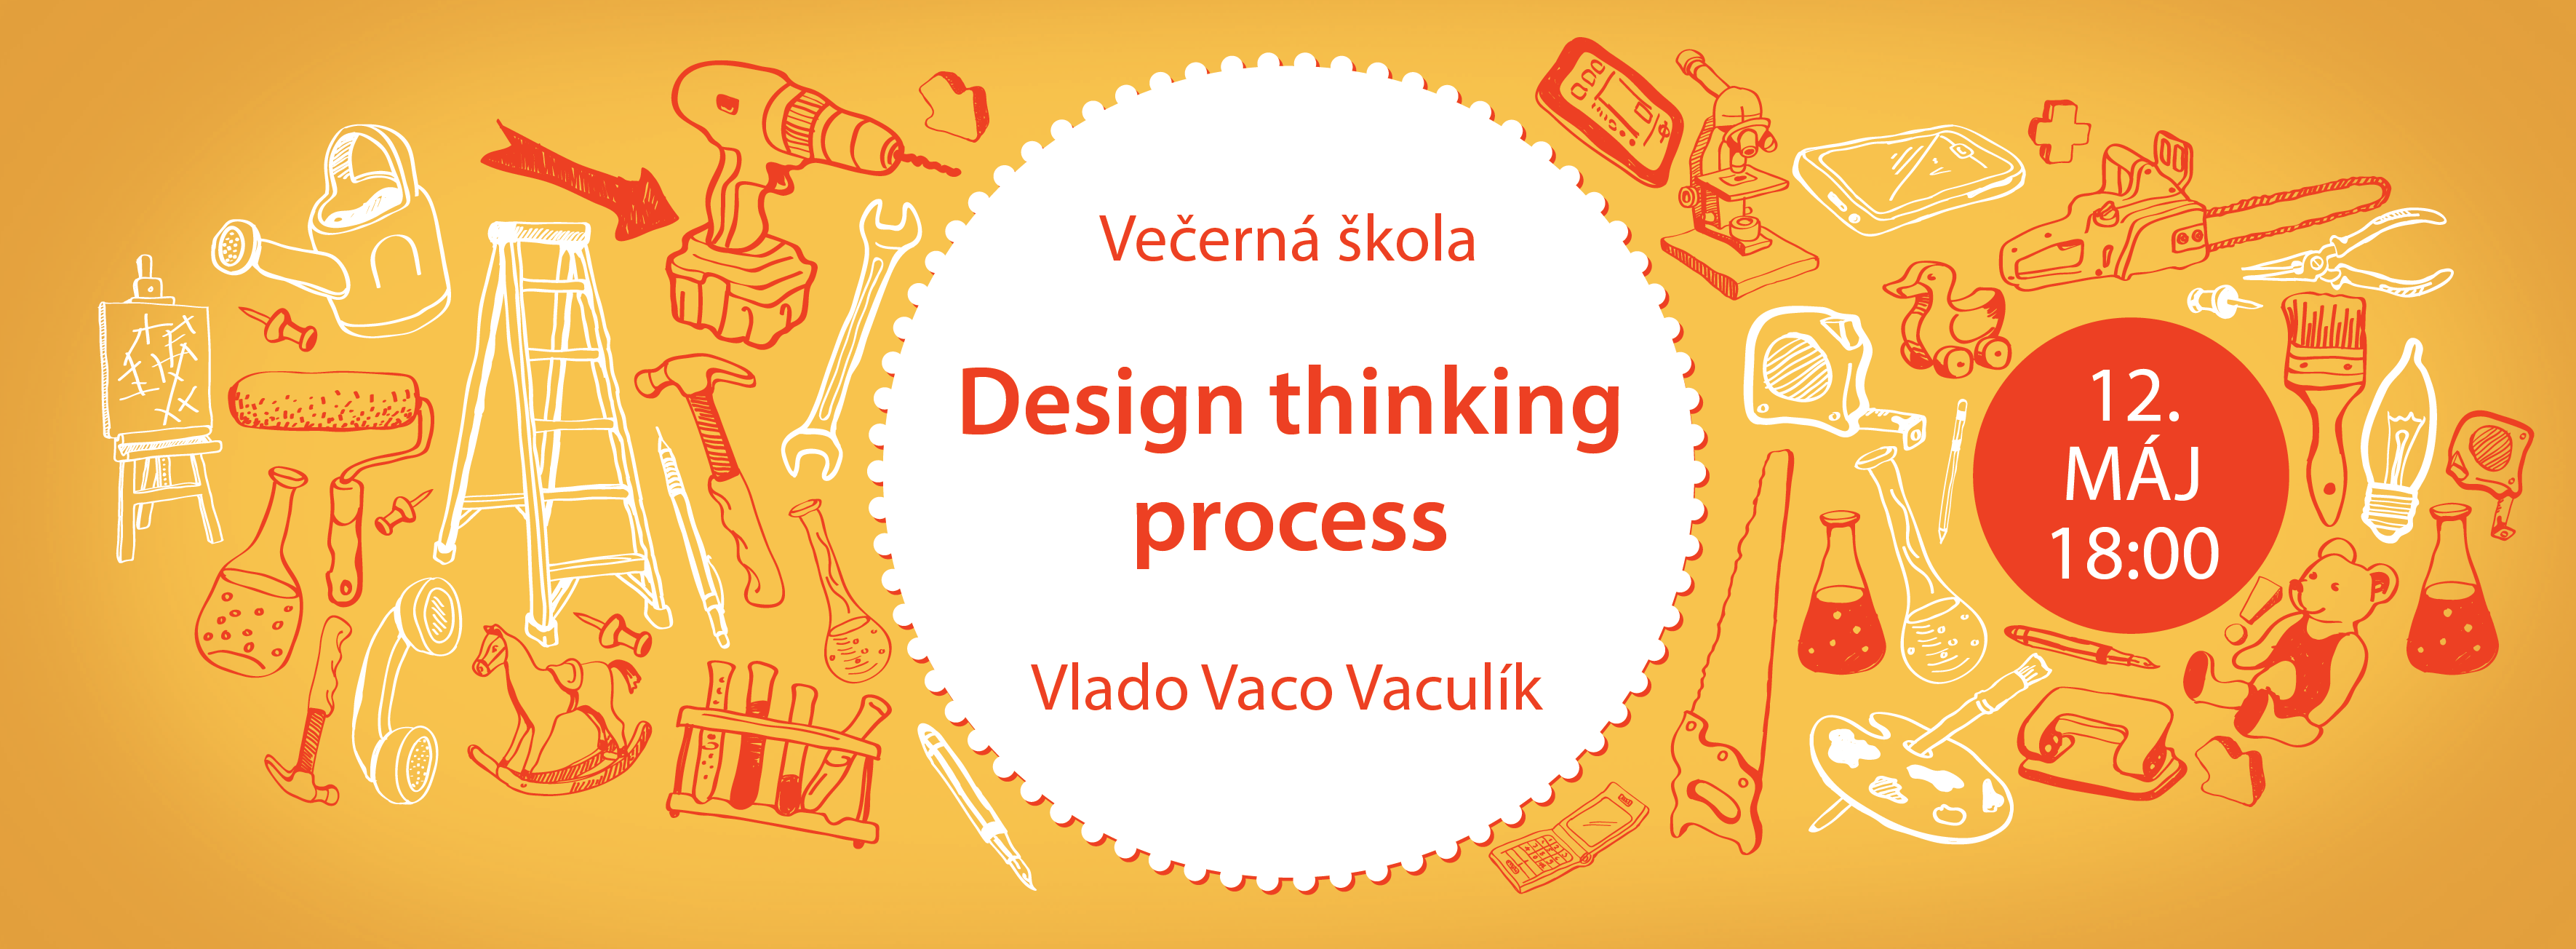 Design thinkin process